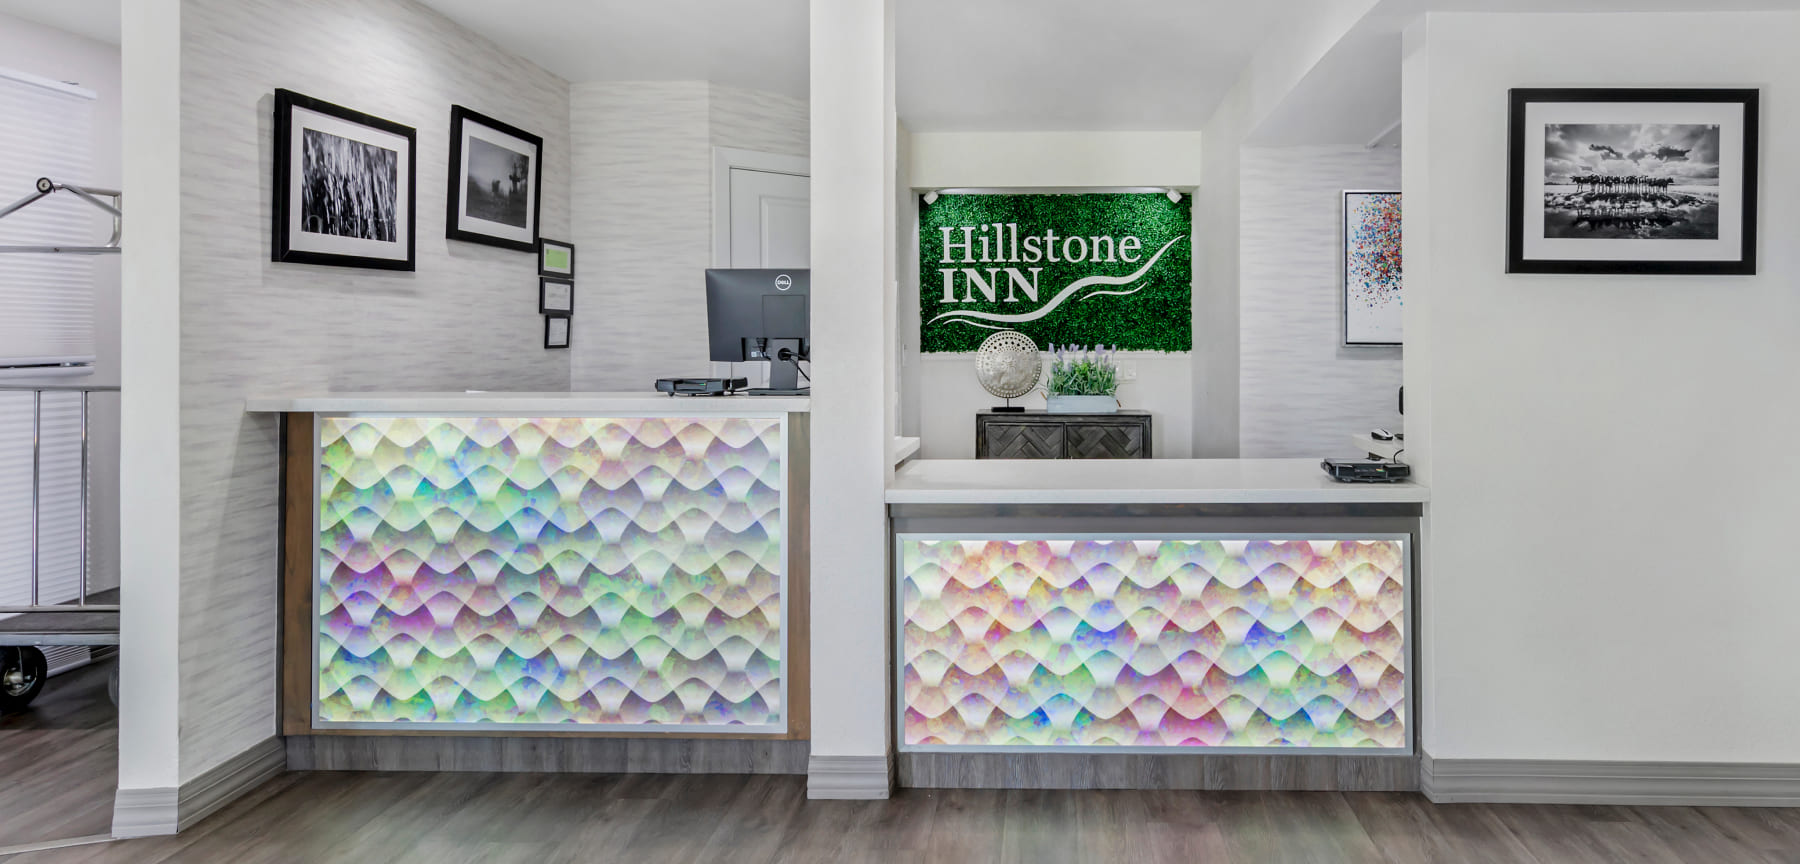 Hillstone Inn Tulare, Ascend Hotel Collection - 1183 N Blackstone St, Tulare, California 93274